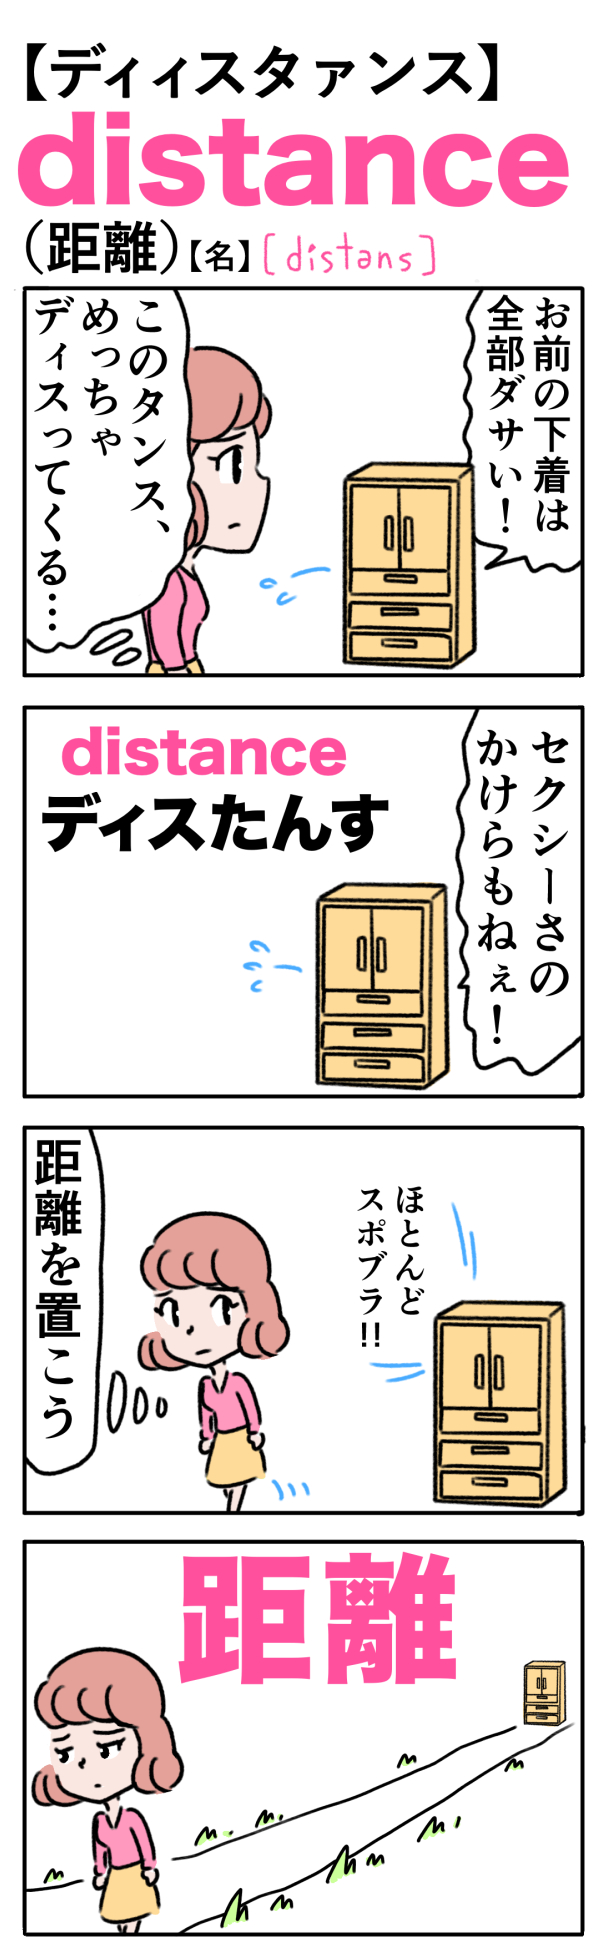 distance（距離） の語呂合わせ英単語